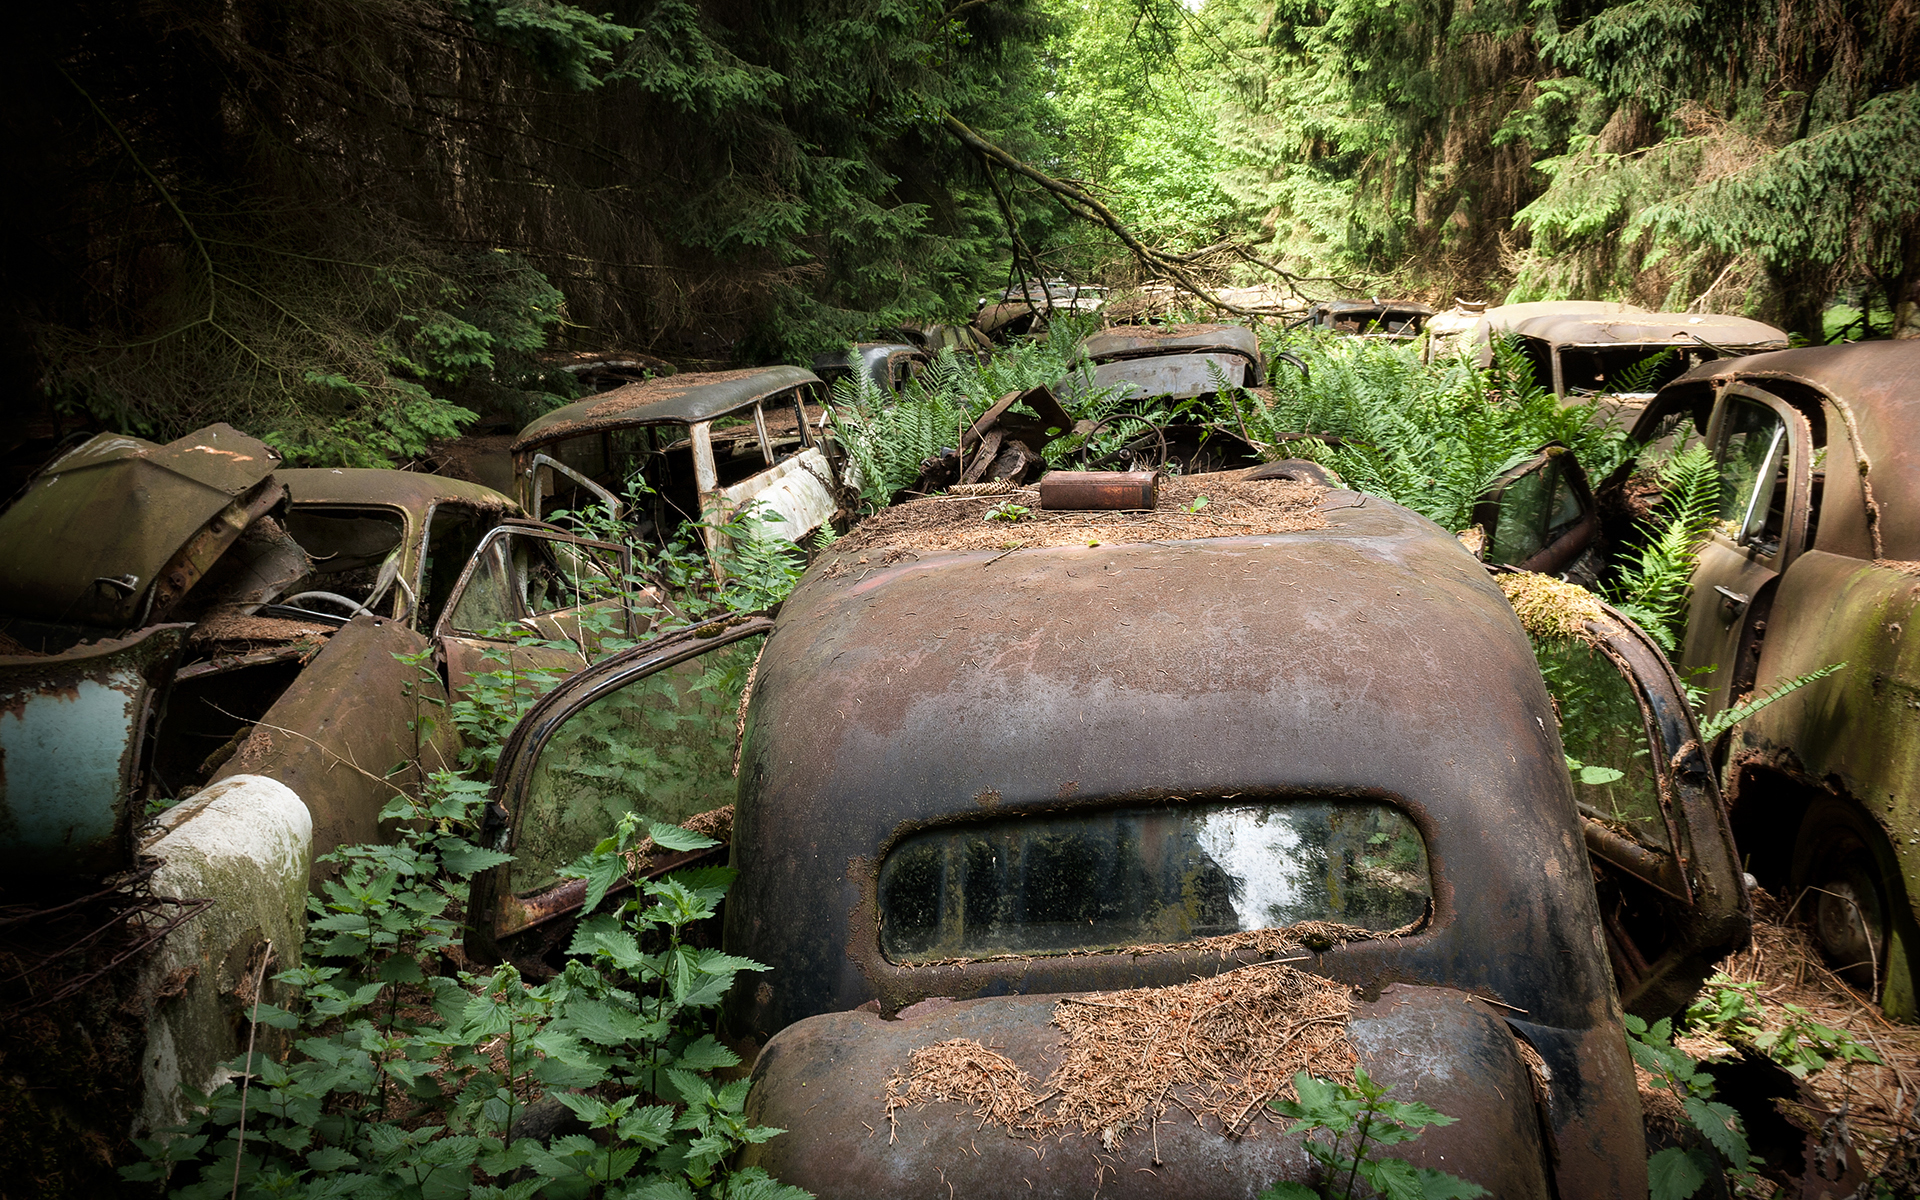 Картинки по запросу abandoned cars in forest